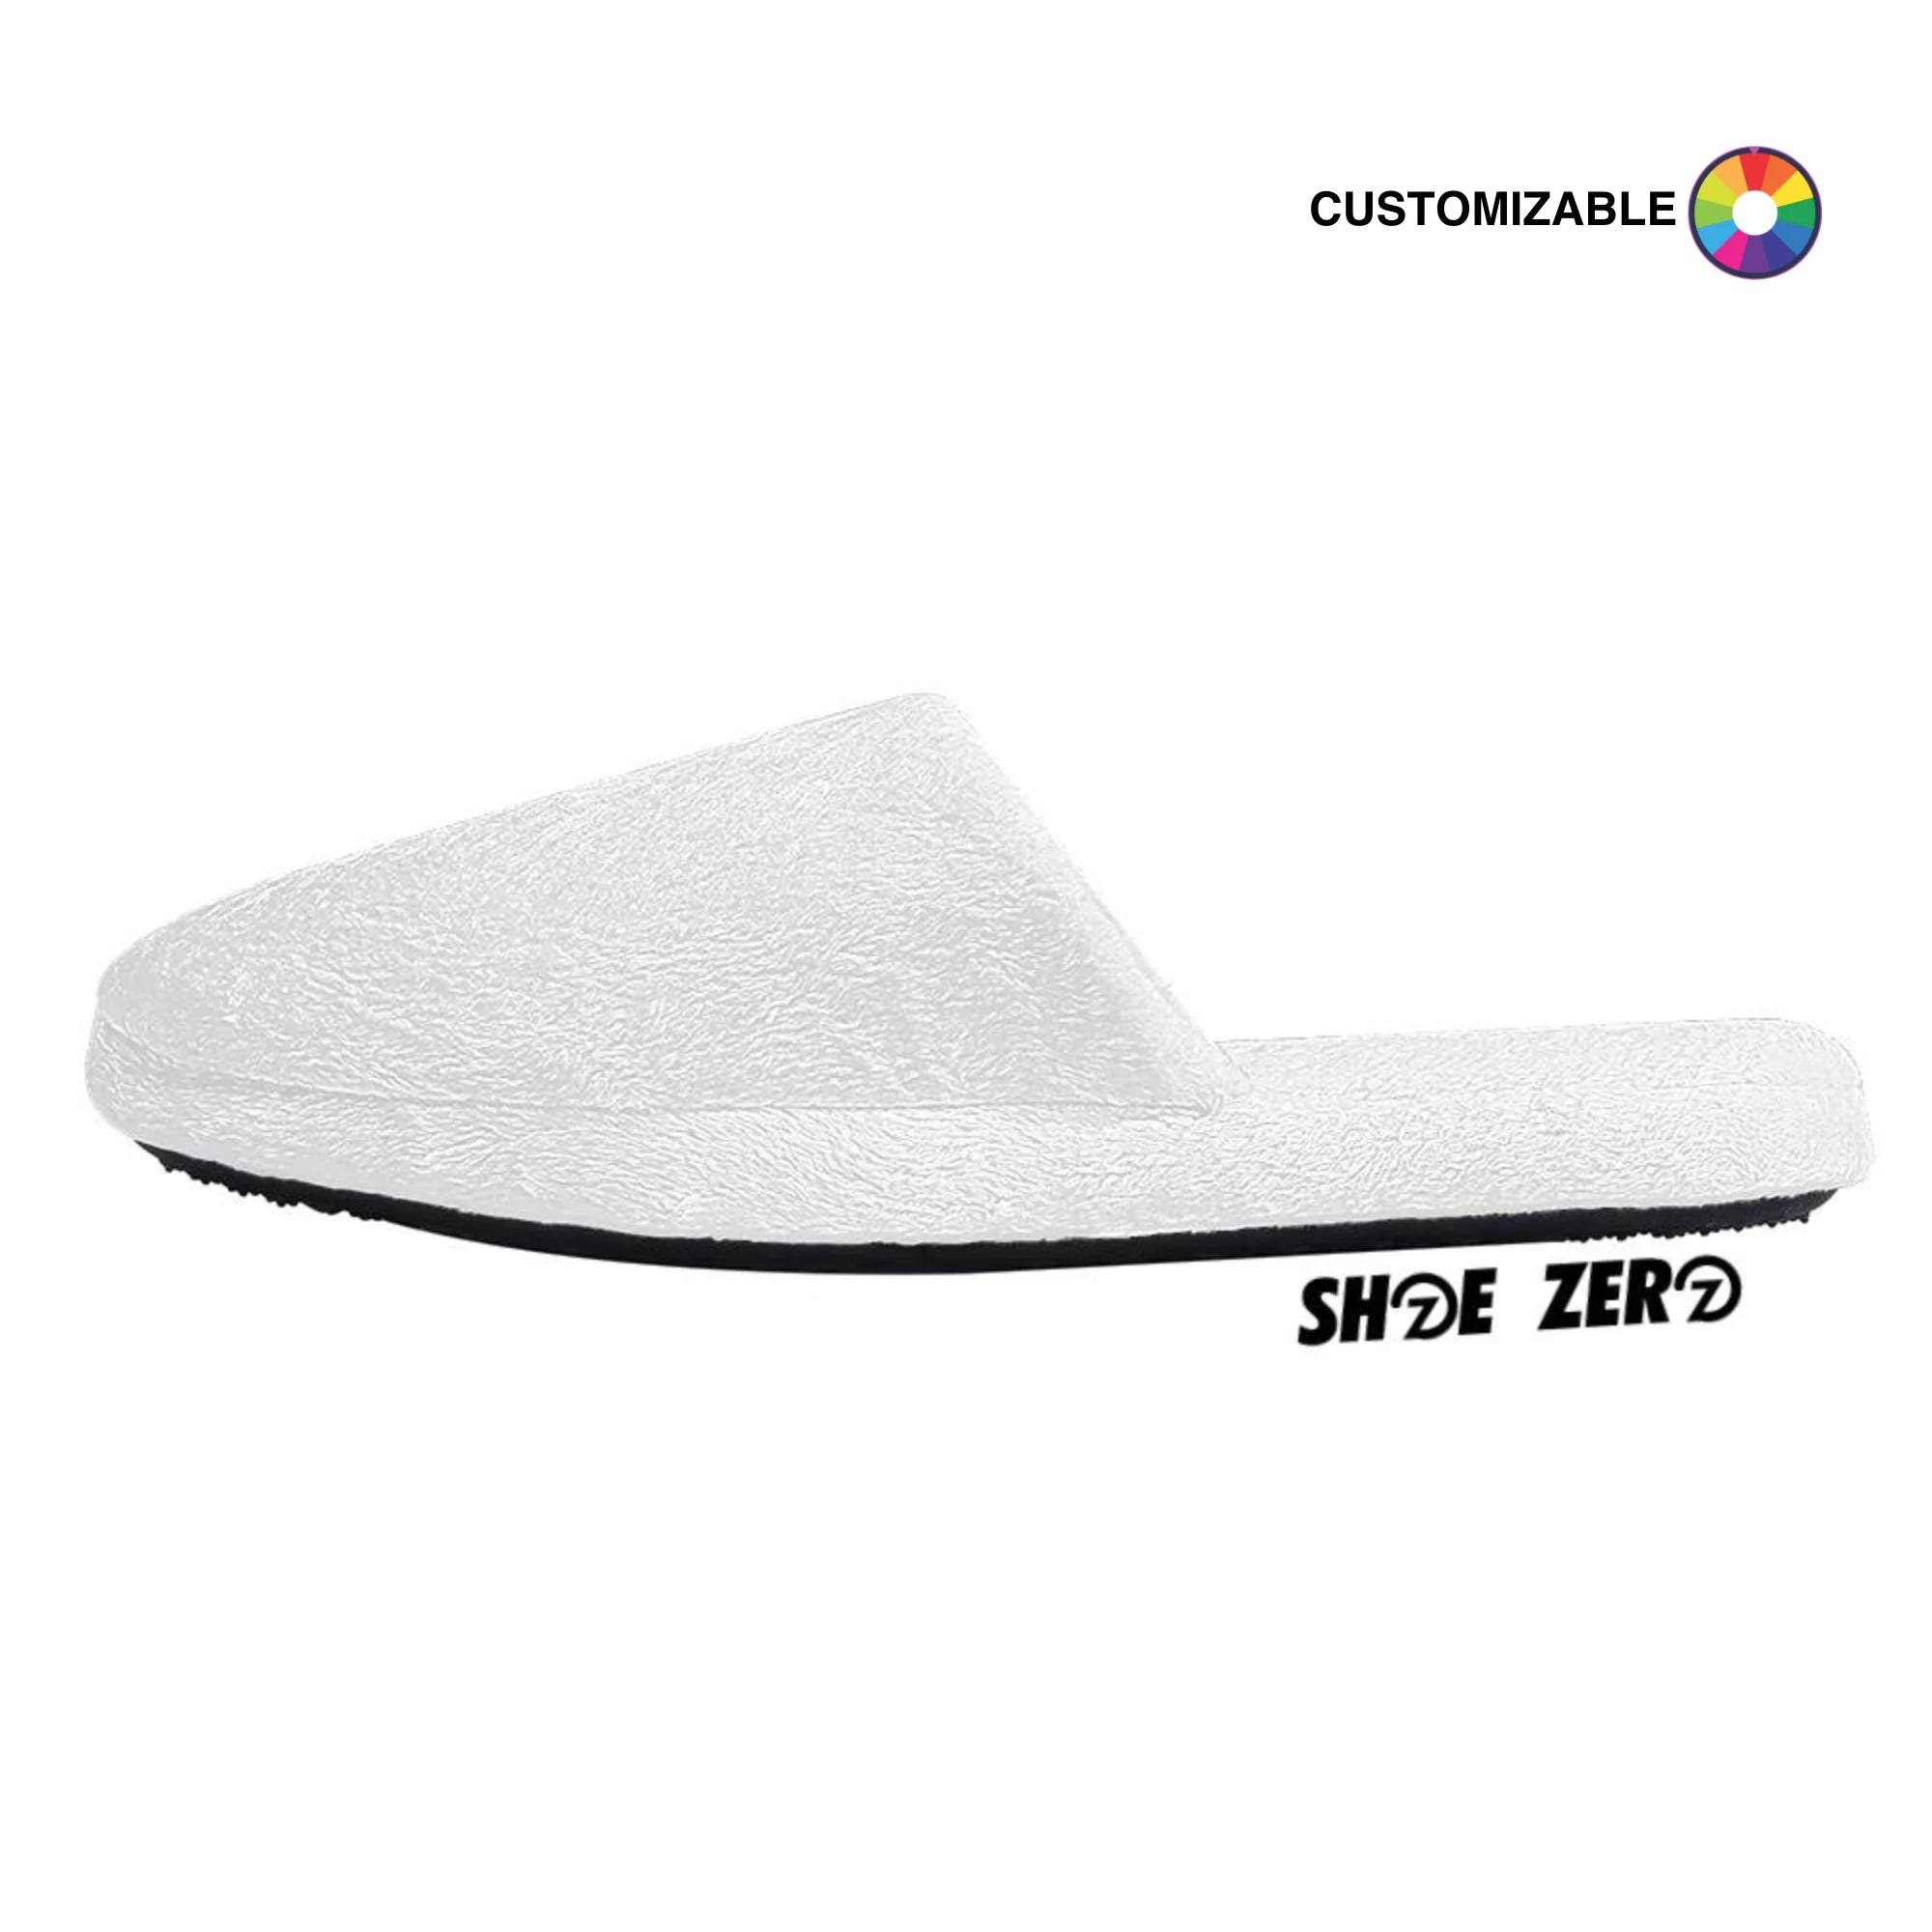 Customizable Home Slippers (White) | Design your own | Shoe Zero